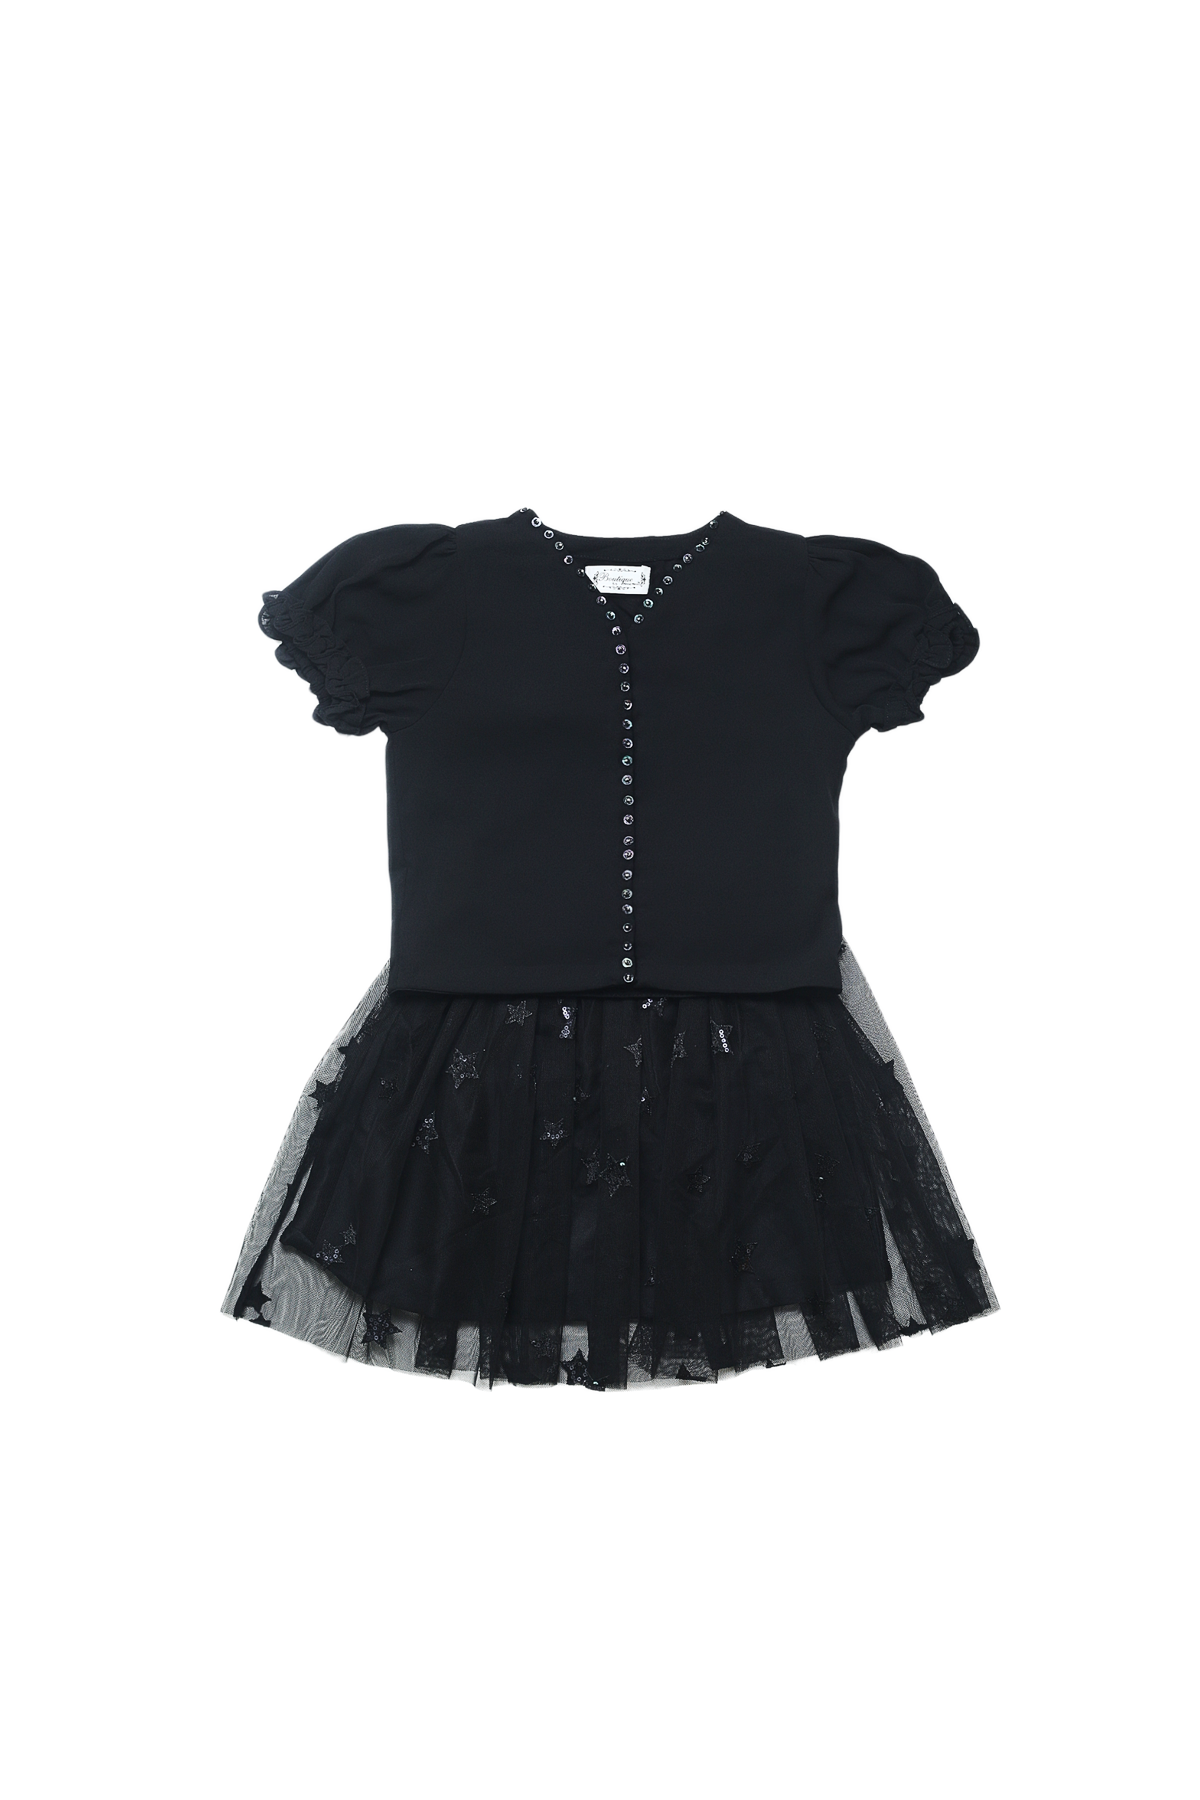 Embellished Top & Skirt (MMB-S45)